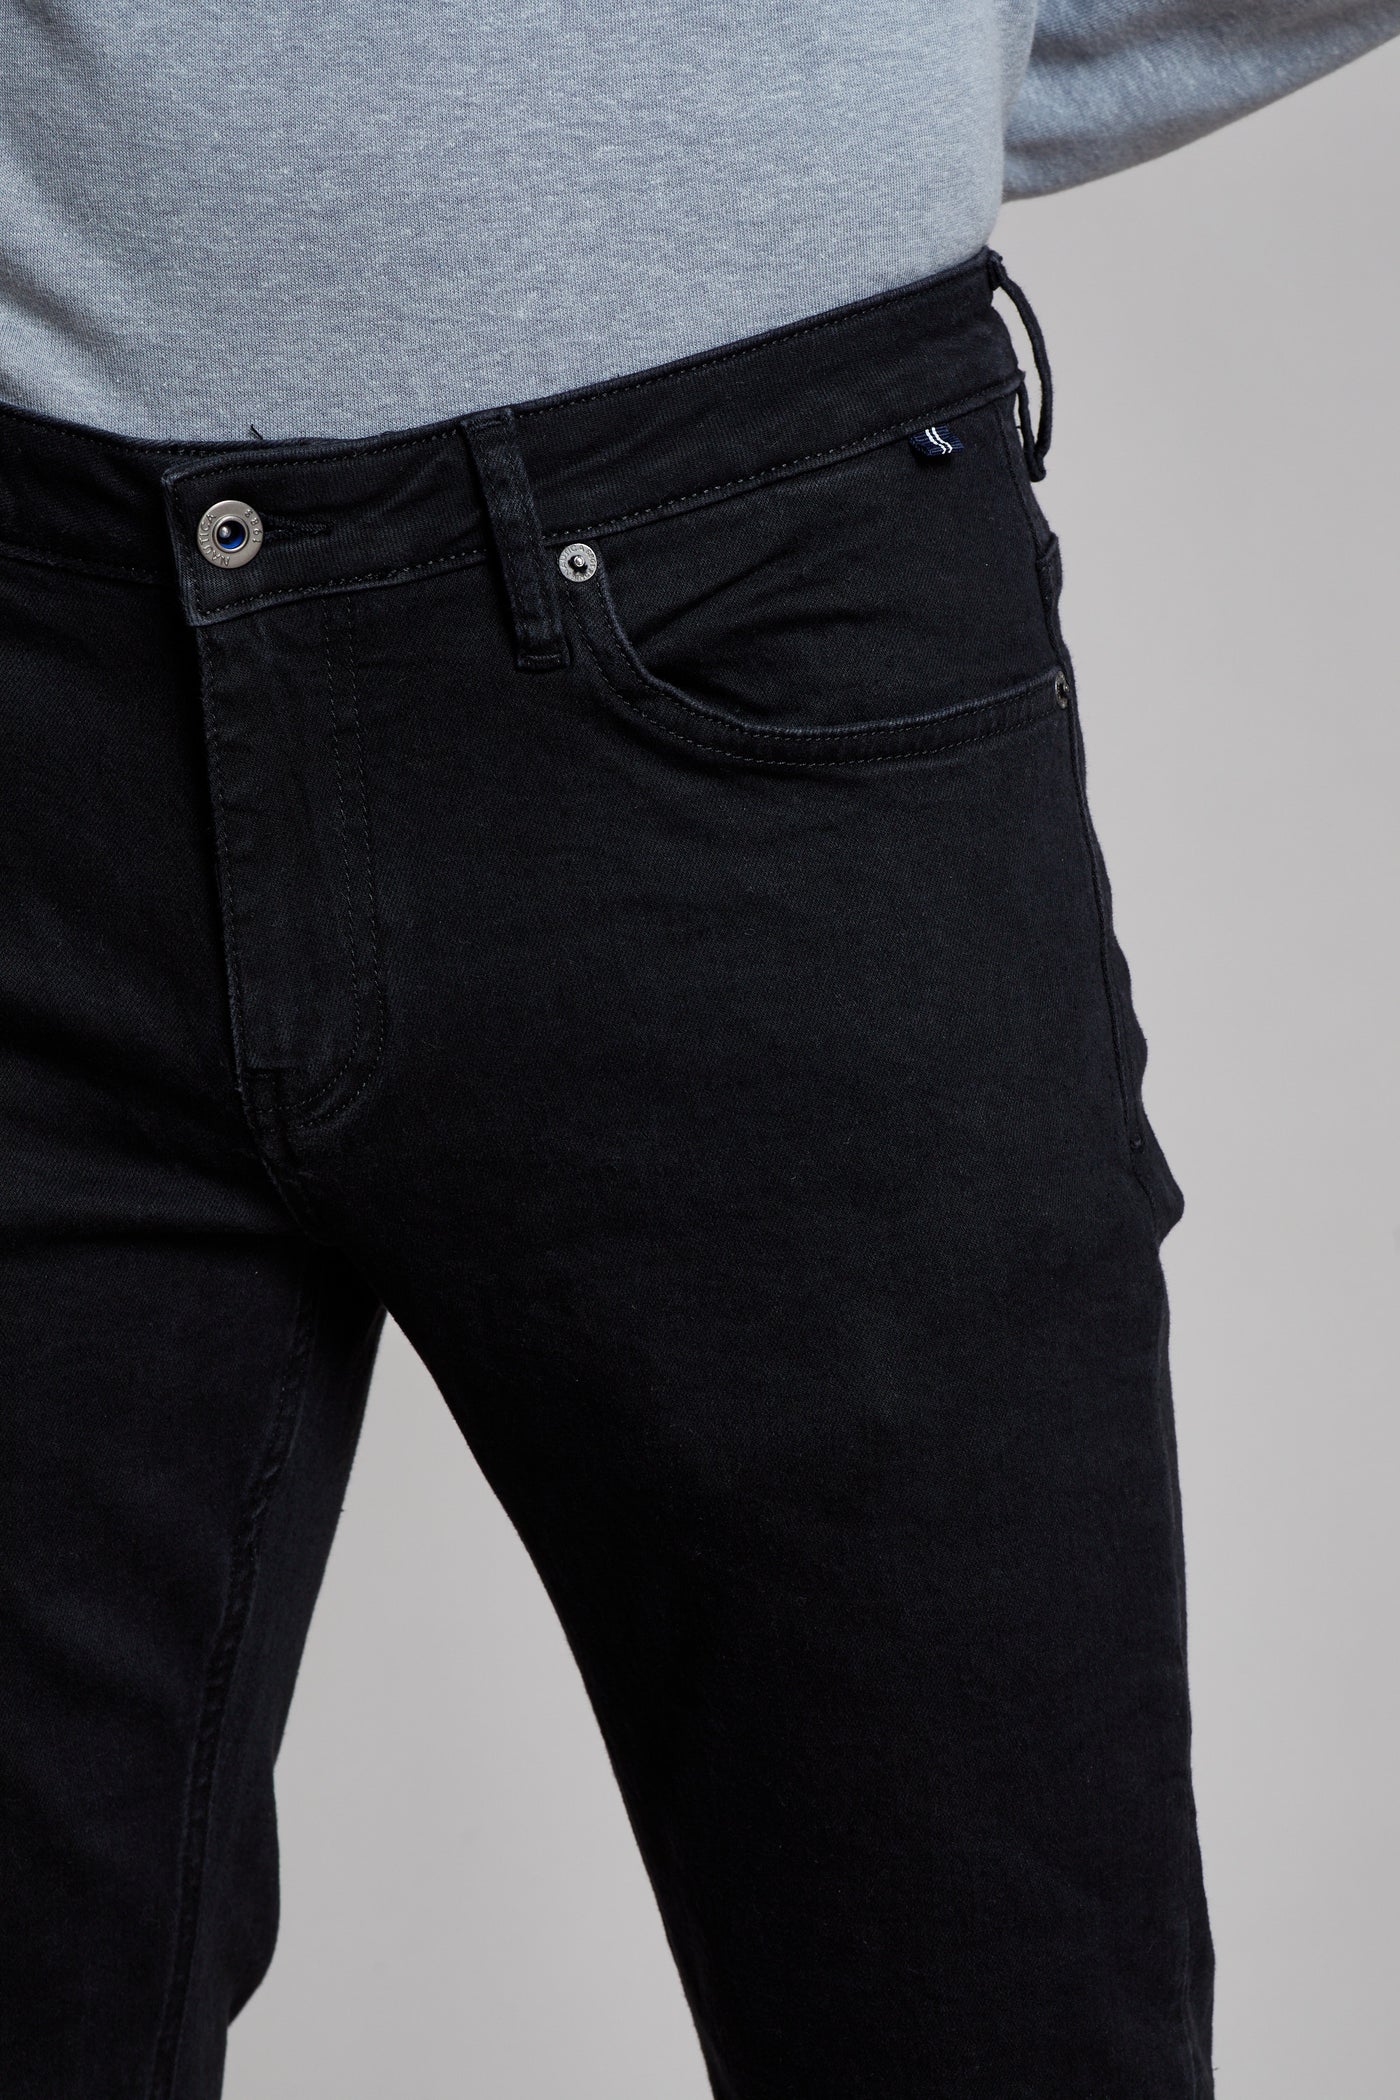 מכנס ג'ינס בצבע שחור